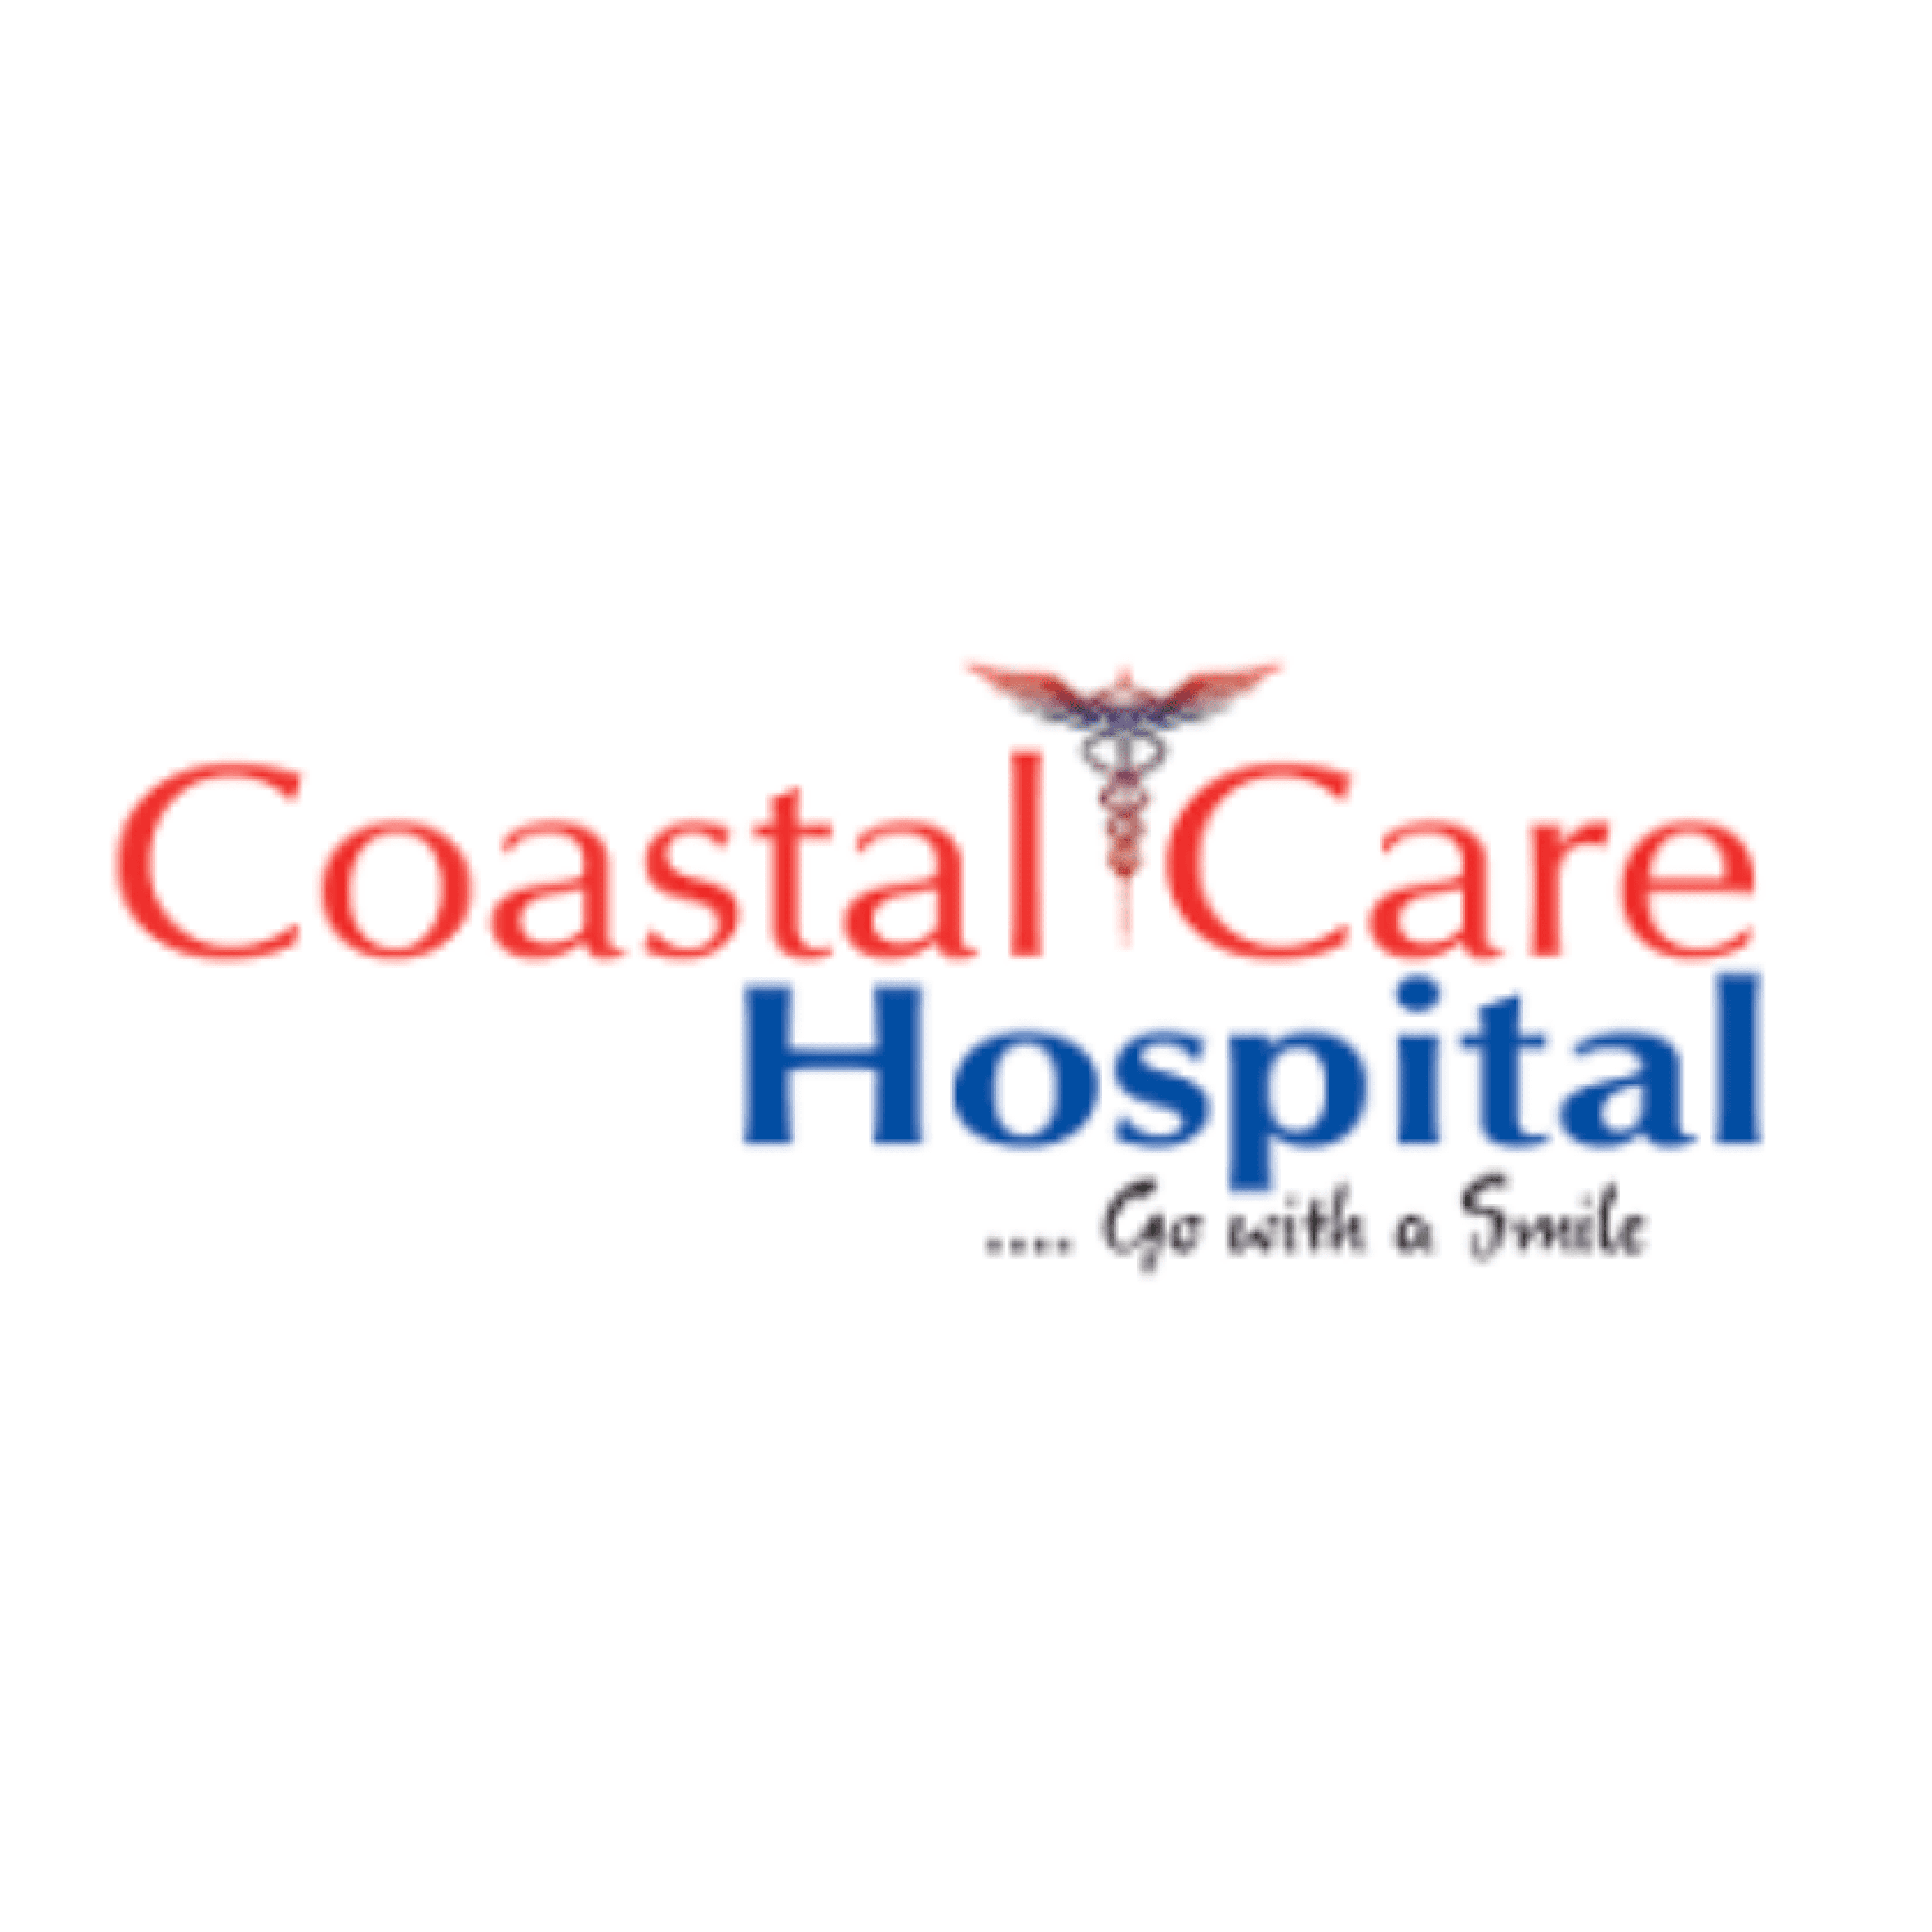 Coastal Care Hospital